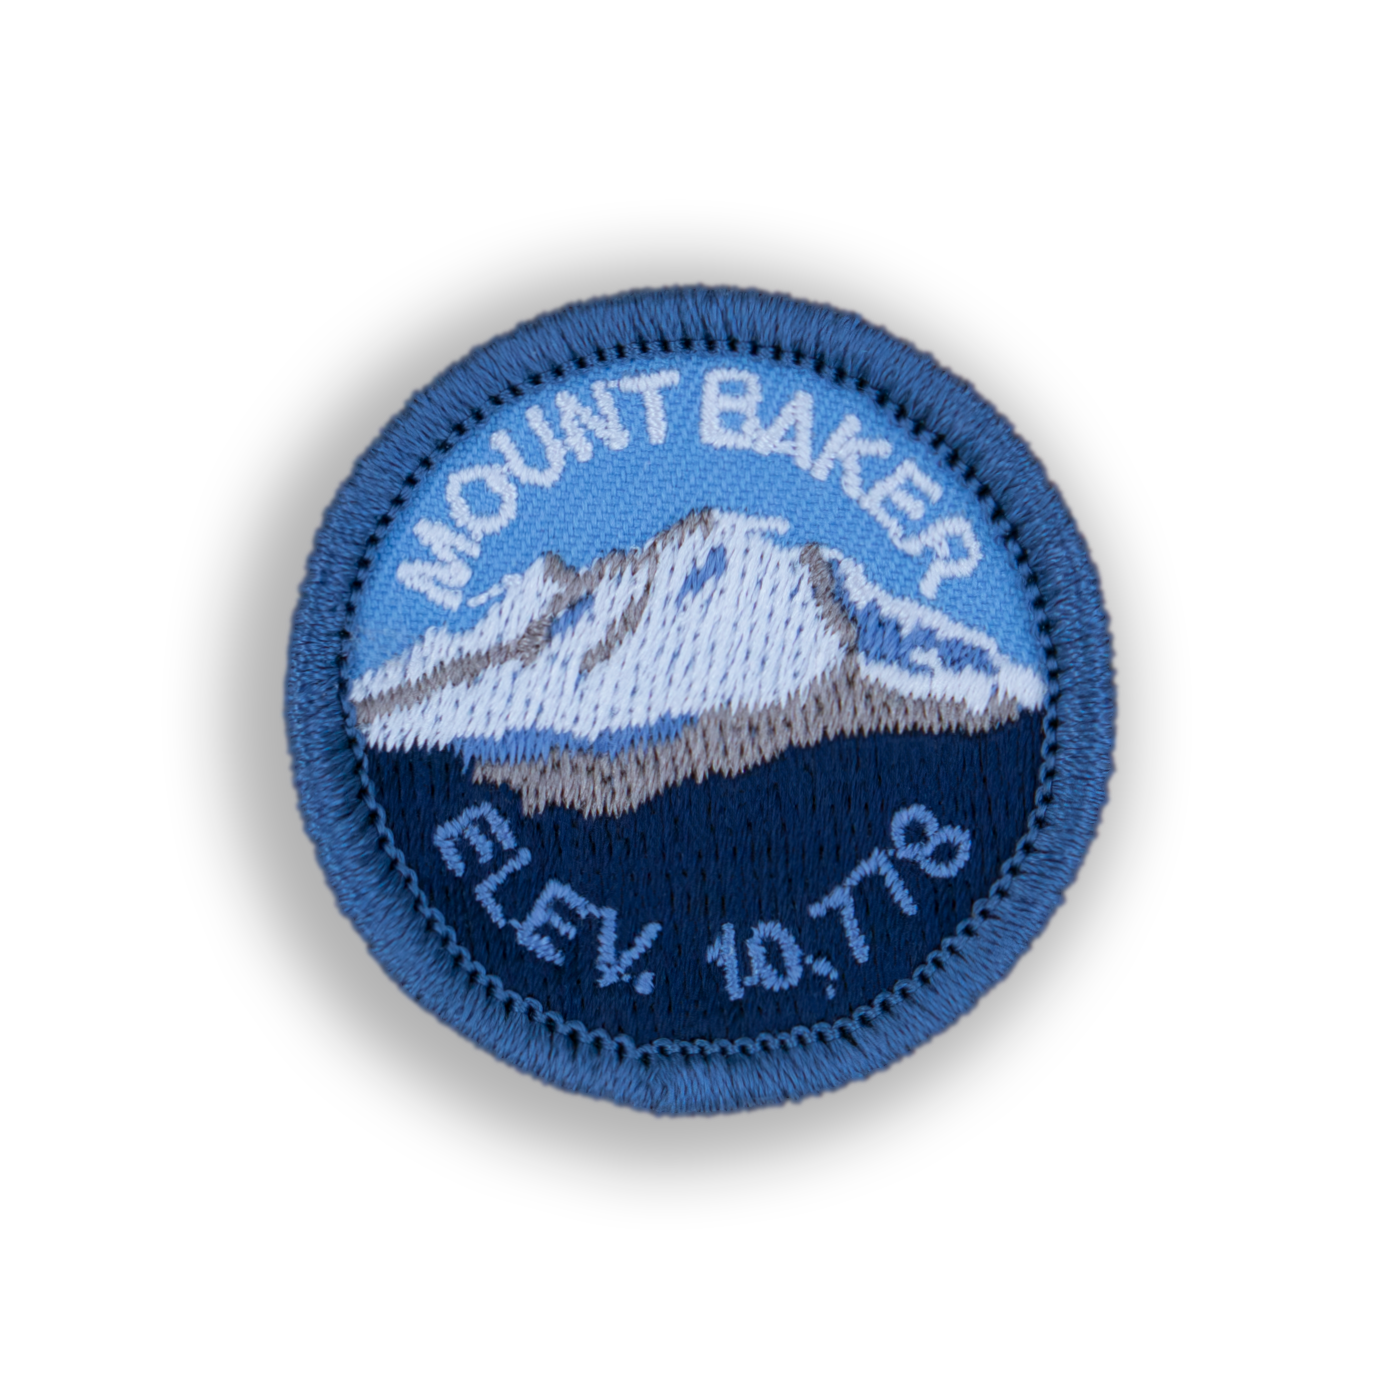 Mount Baker Patch | Demerit Wear - Fake Merit Badges